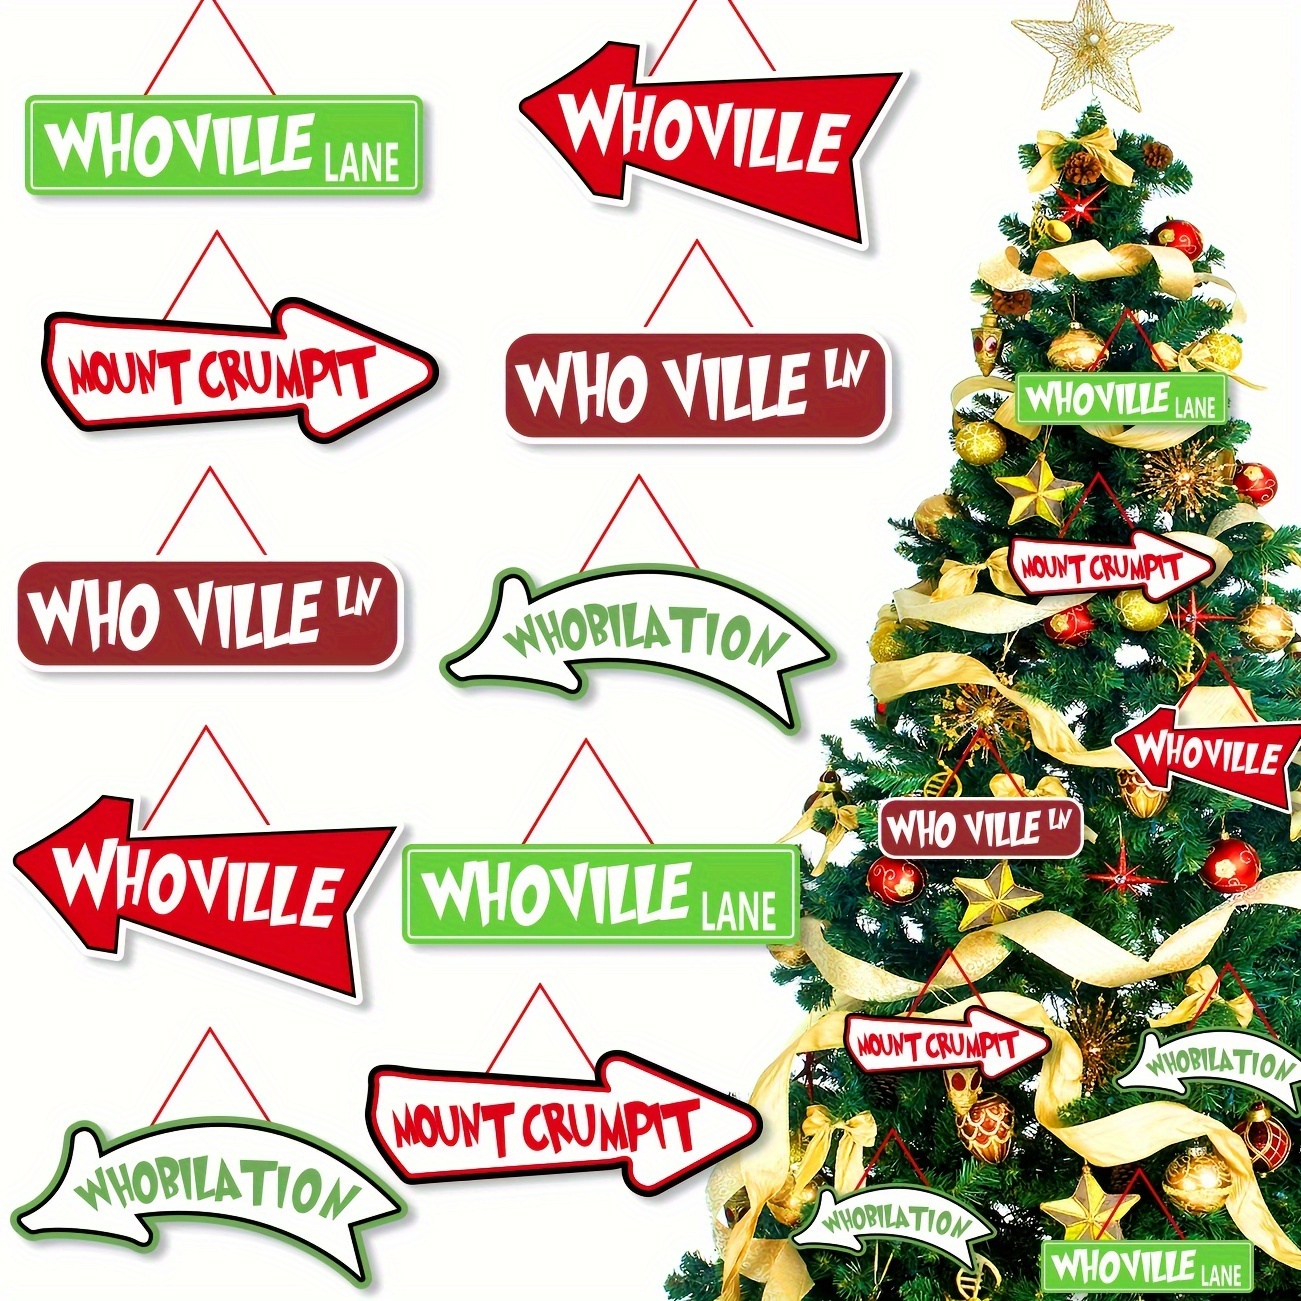 https://img.kwcdn.com/product/christmas-tree-decorations/d69d2f15w98k18-cd2a216d/Fancyalgo/VirtualModelMatting/82a8ffa9cc30e91c3f9a85f639f21199.jpg